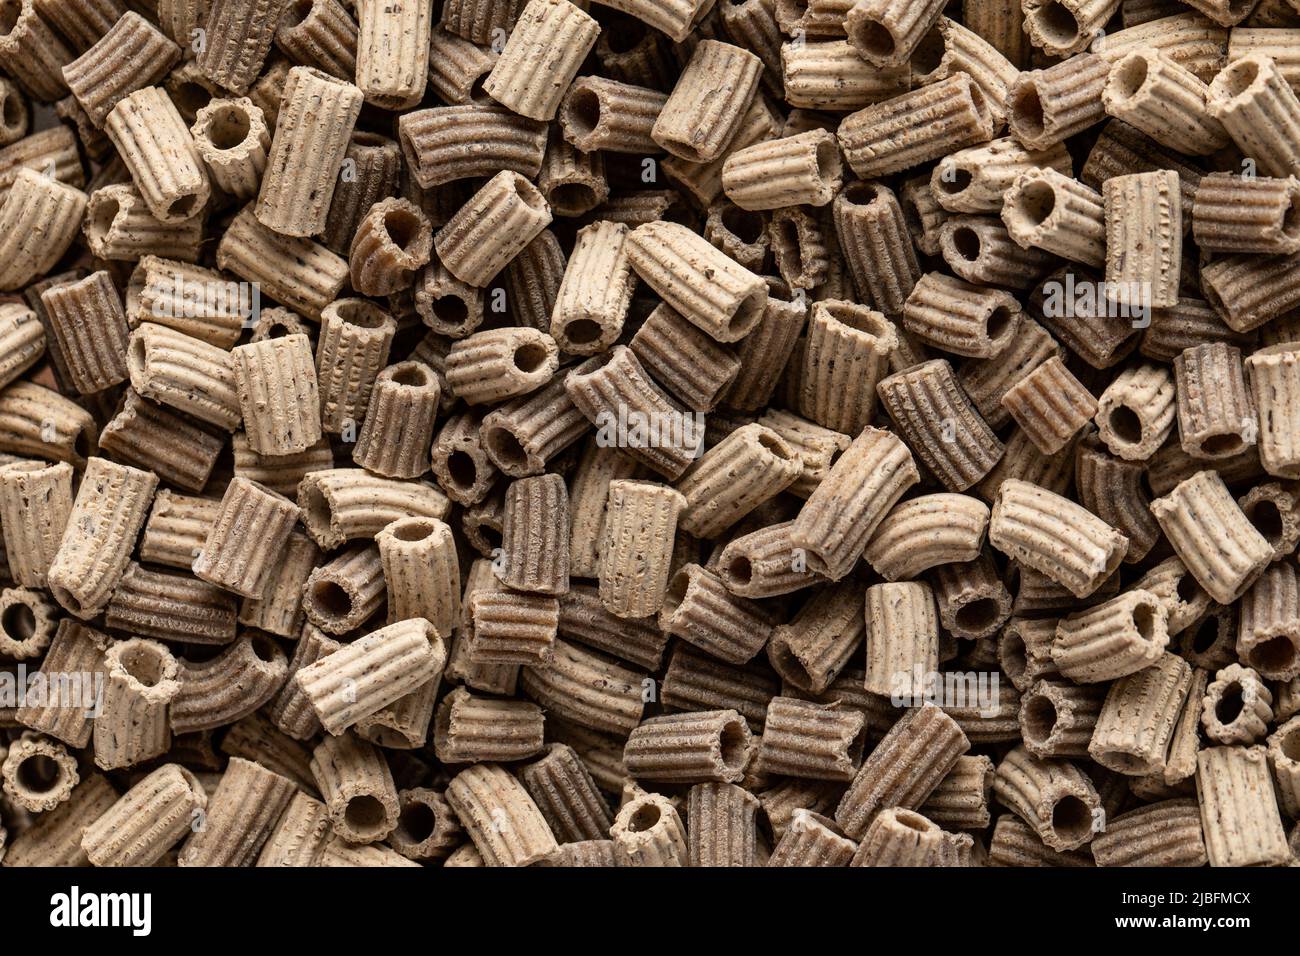 Top view of raw tubetti buckwheat pasta Stock Photo